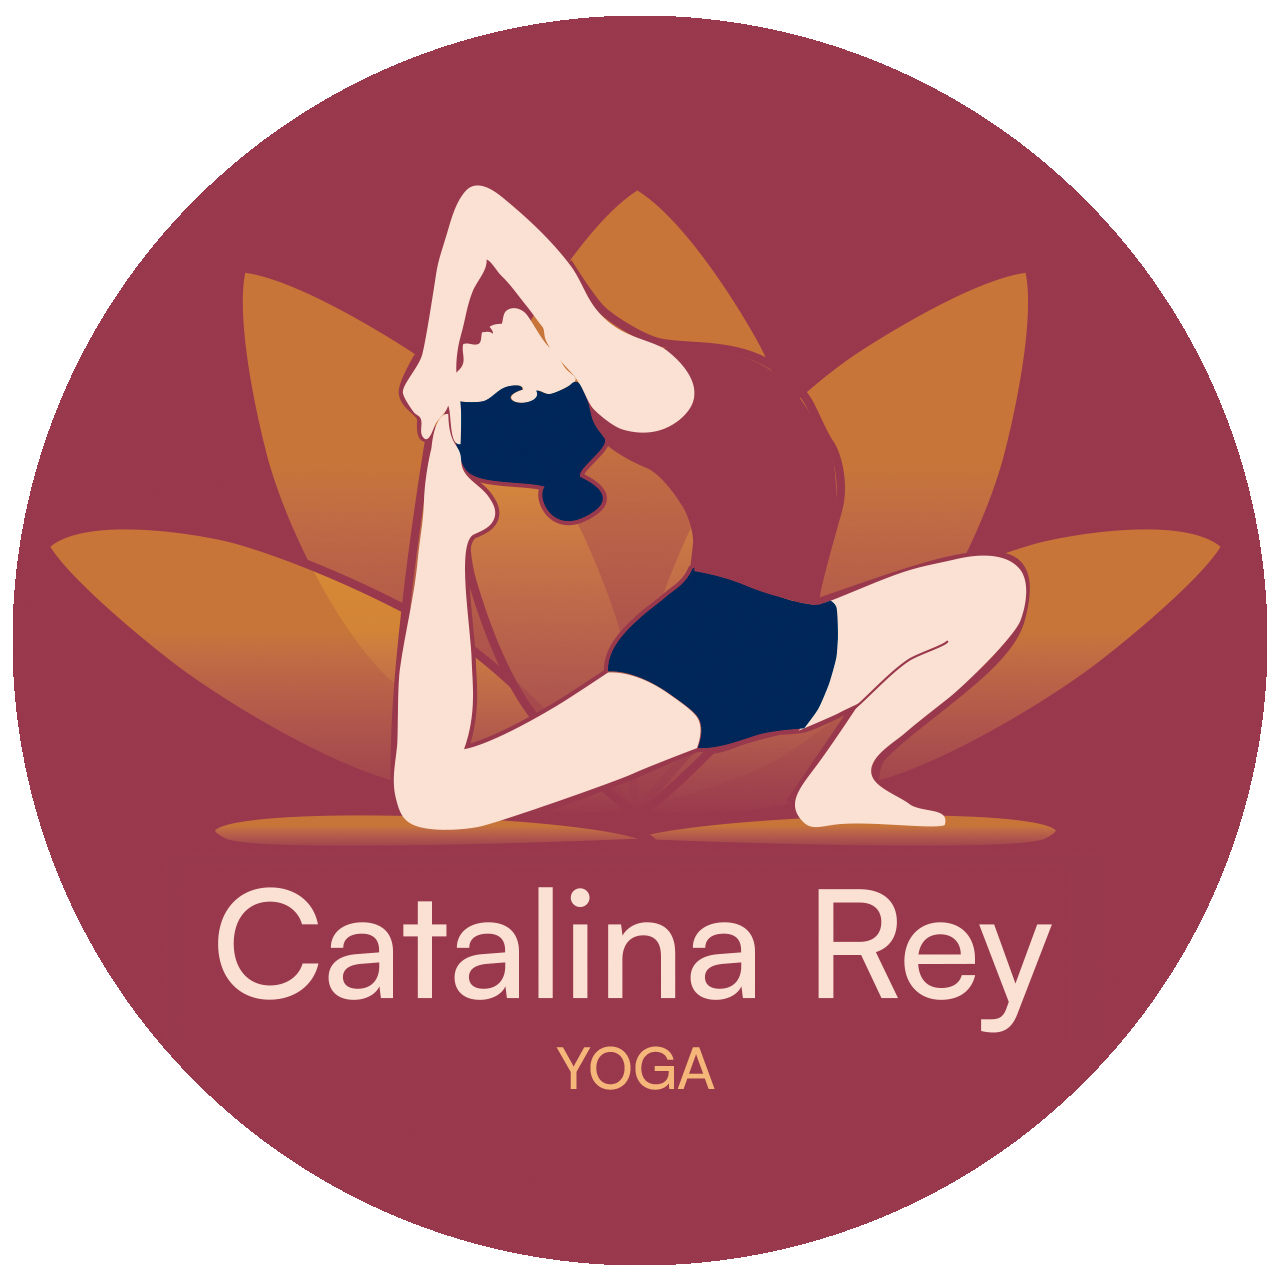 Catalina Rey Yoga